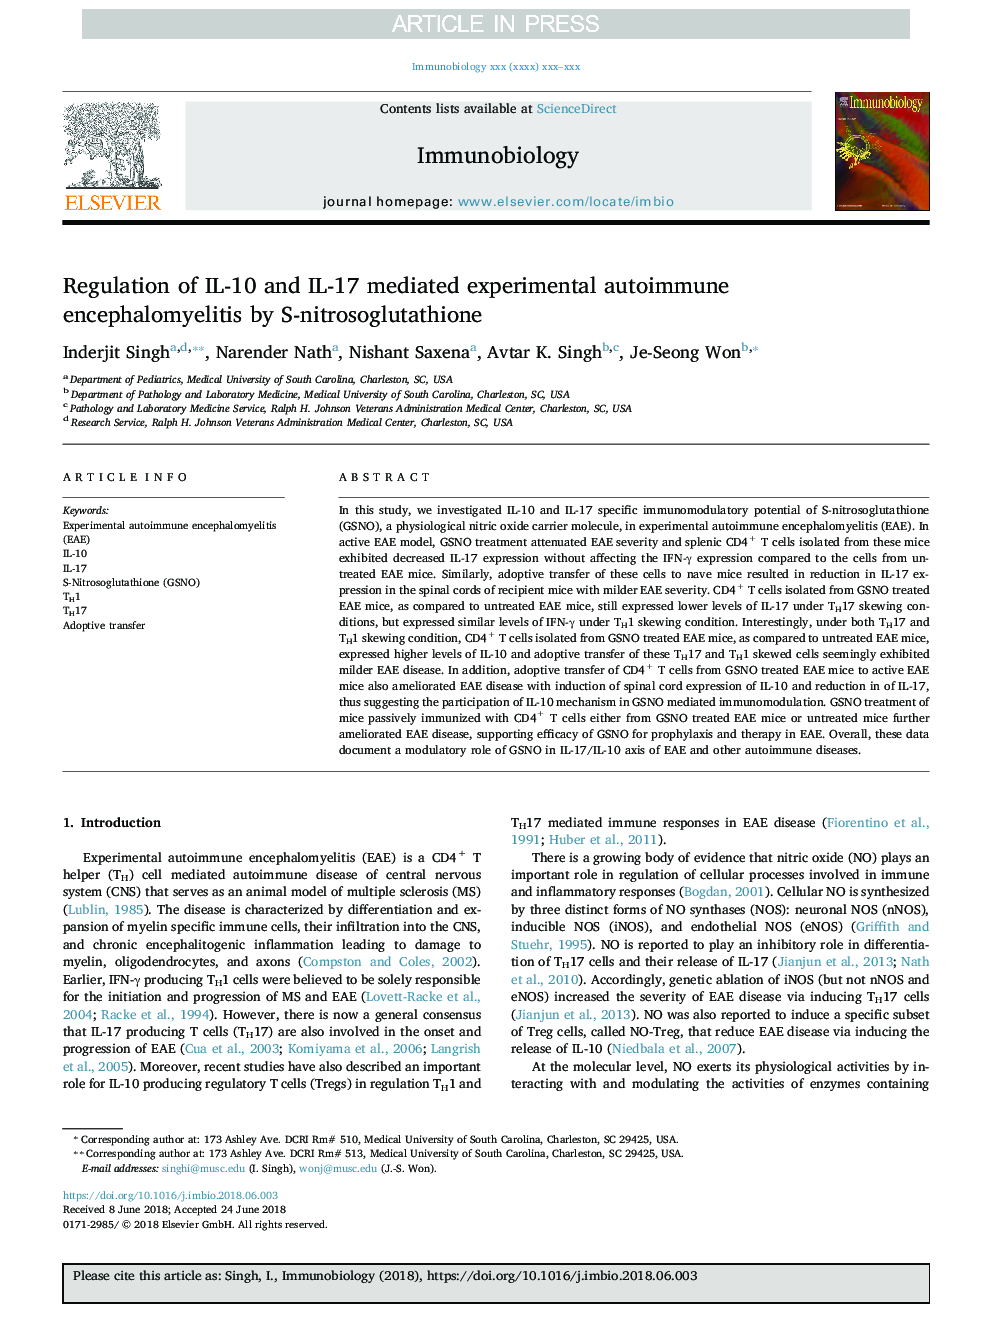 Regulation of IL-10 and IL-17 mediated experimental autoimmune encephalomyelitis by S-nitrosoglutathione